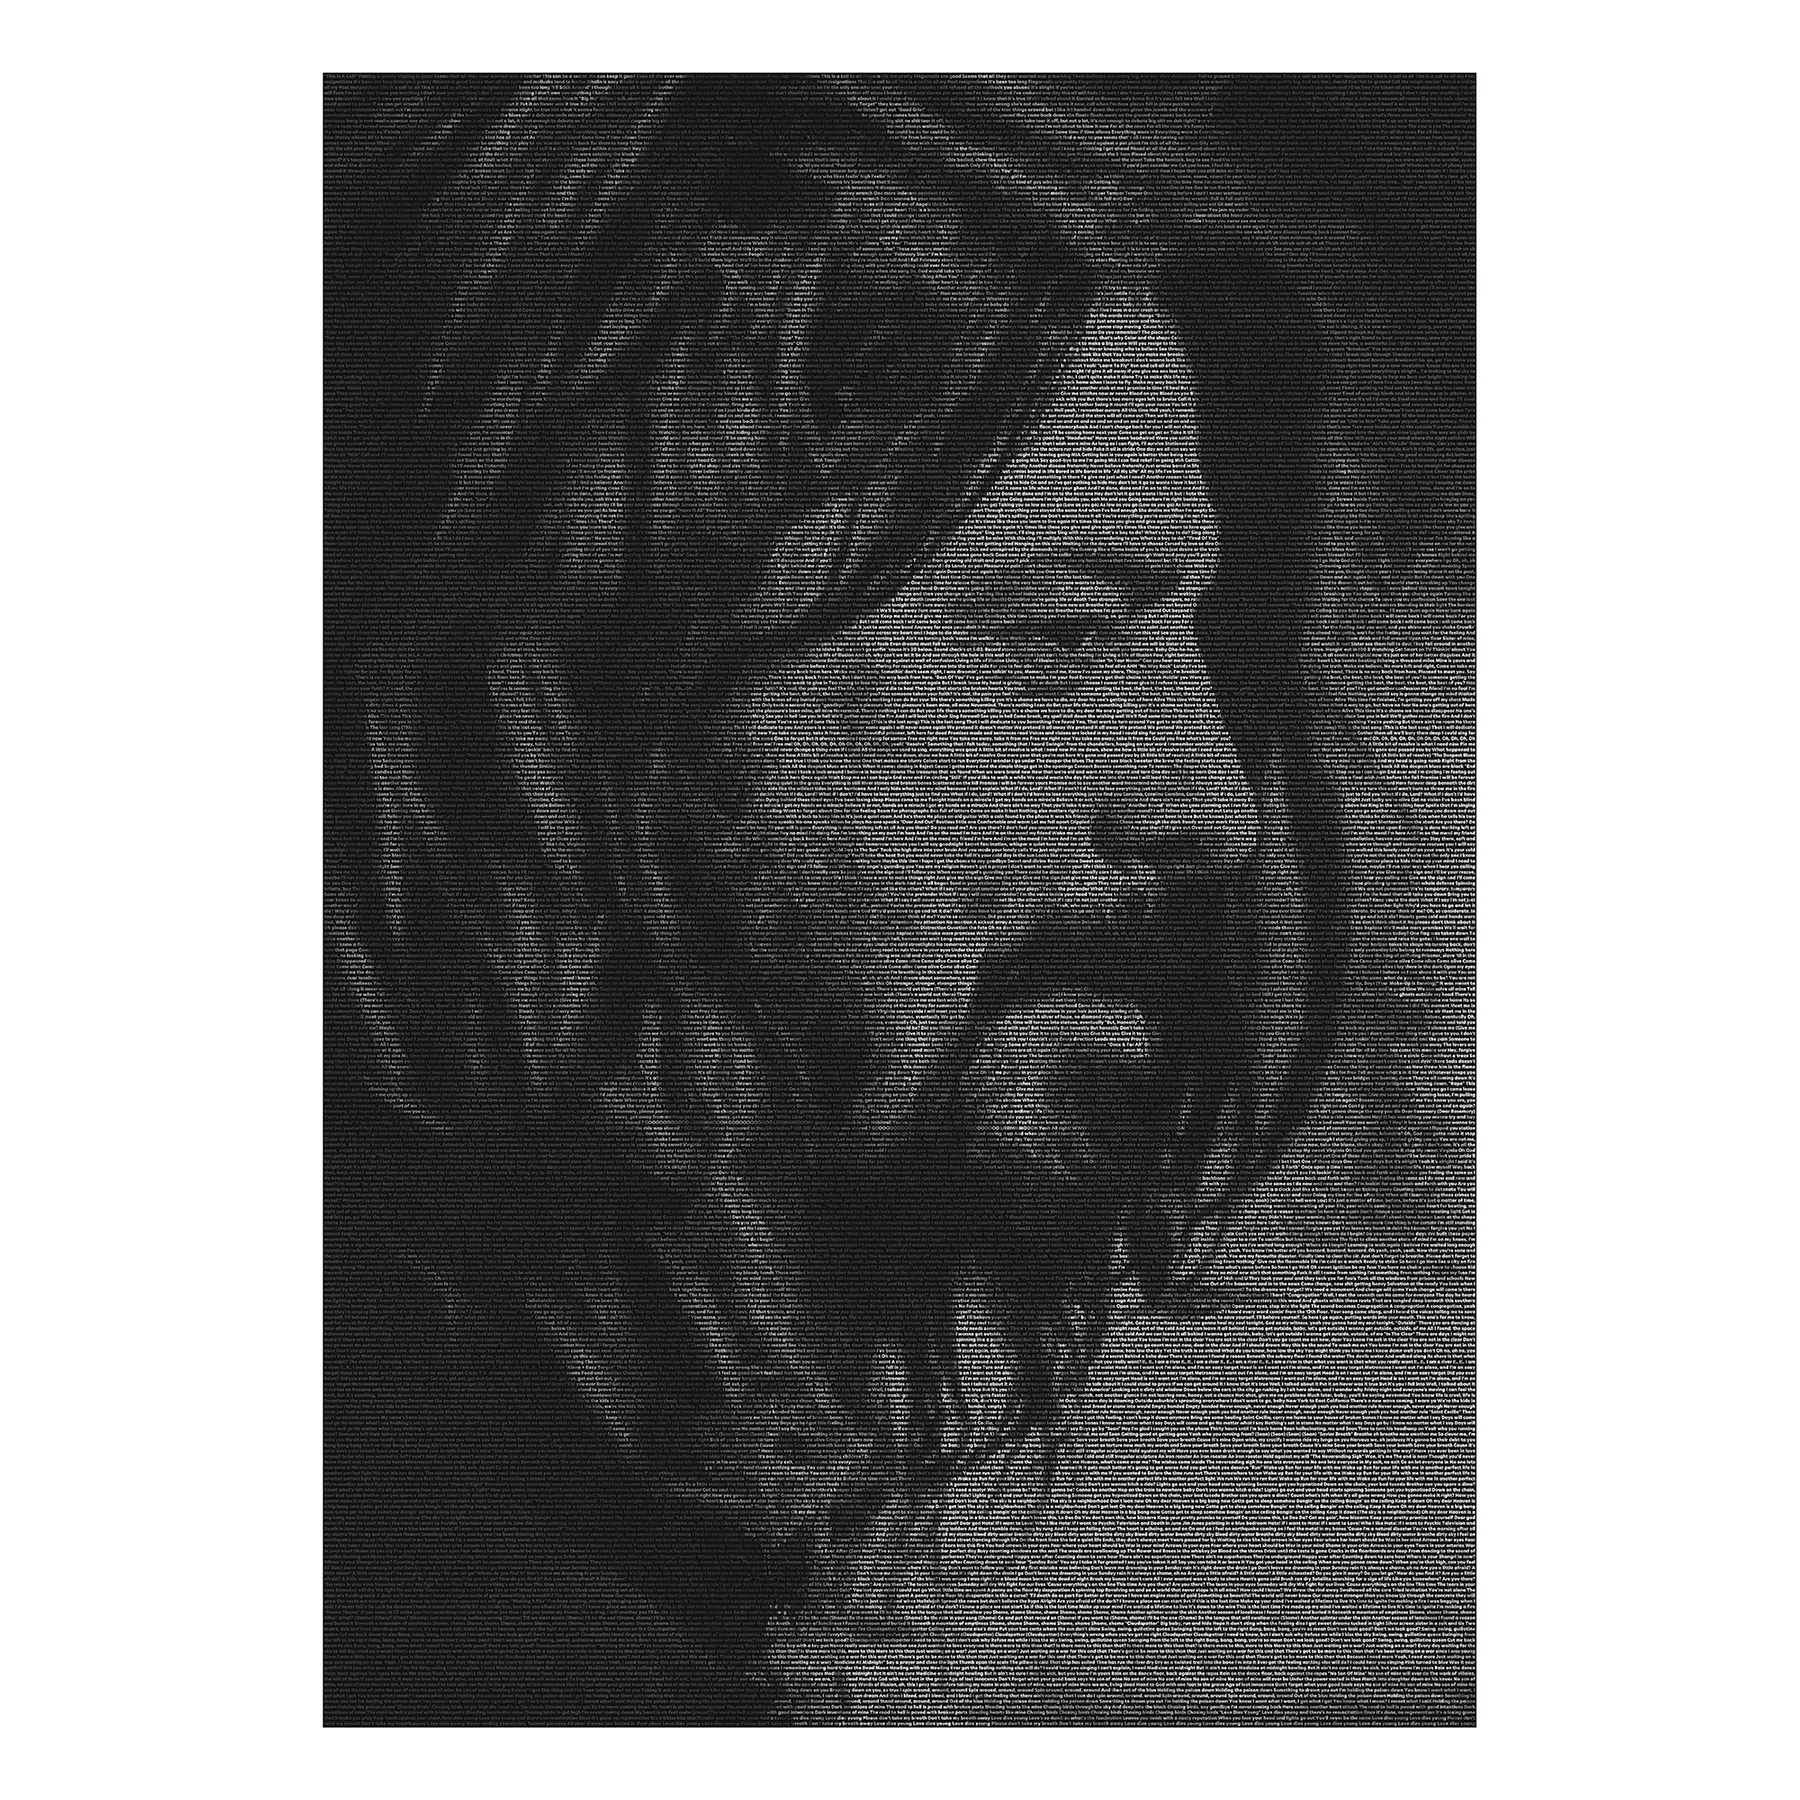 Foo Fighters Archives - Lyrics Art